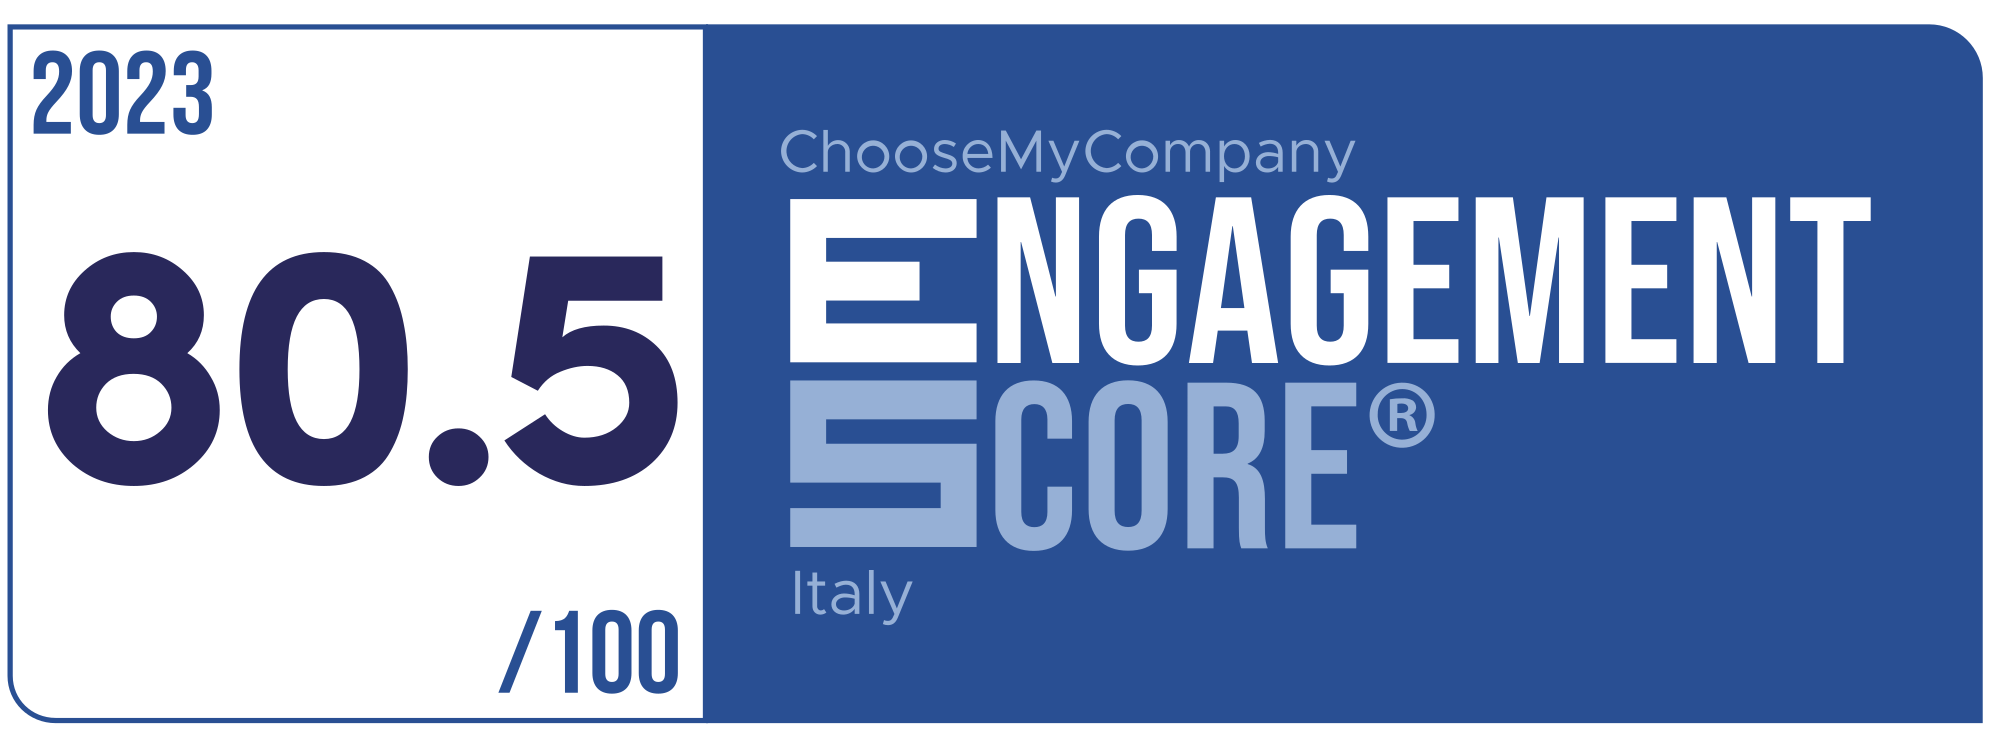 Label Engagement Score 2023 Italy